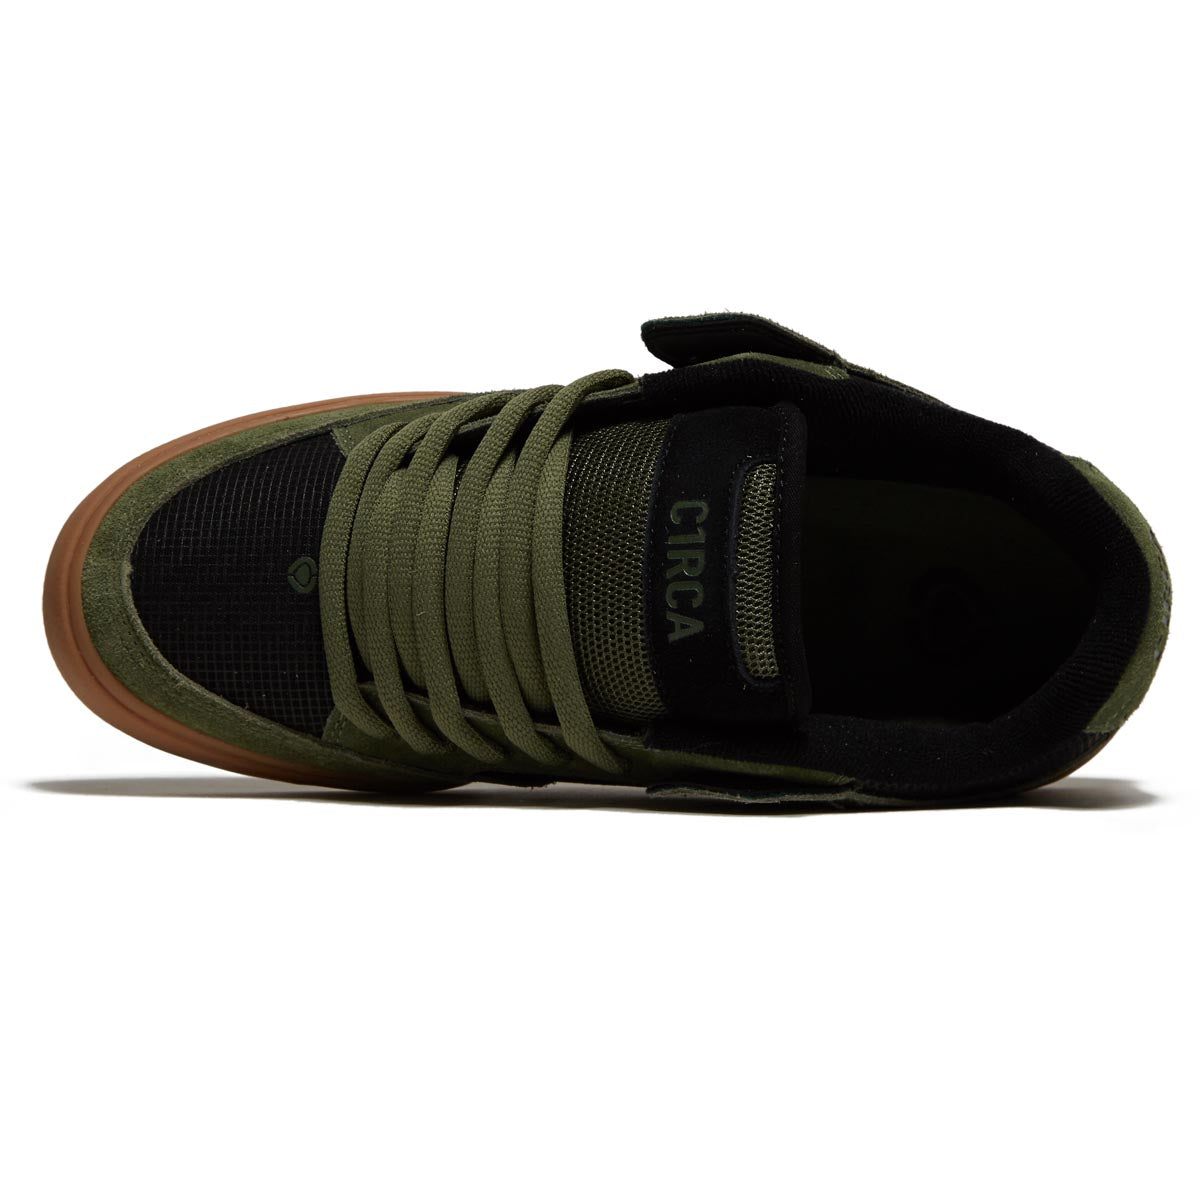 C1rca 205 Vulc Se Shoes - Black/Military Green image 3